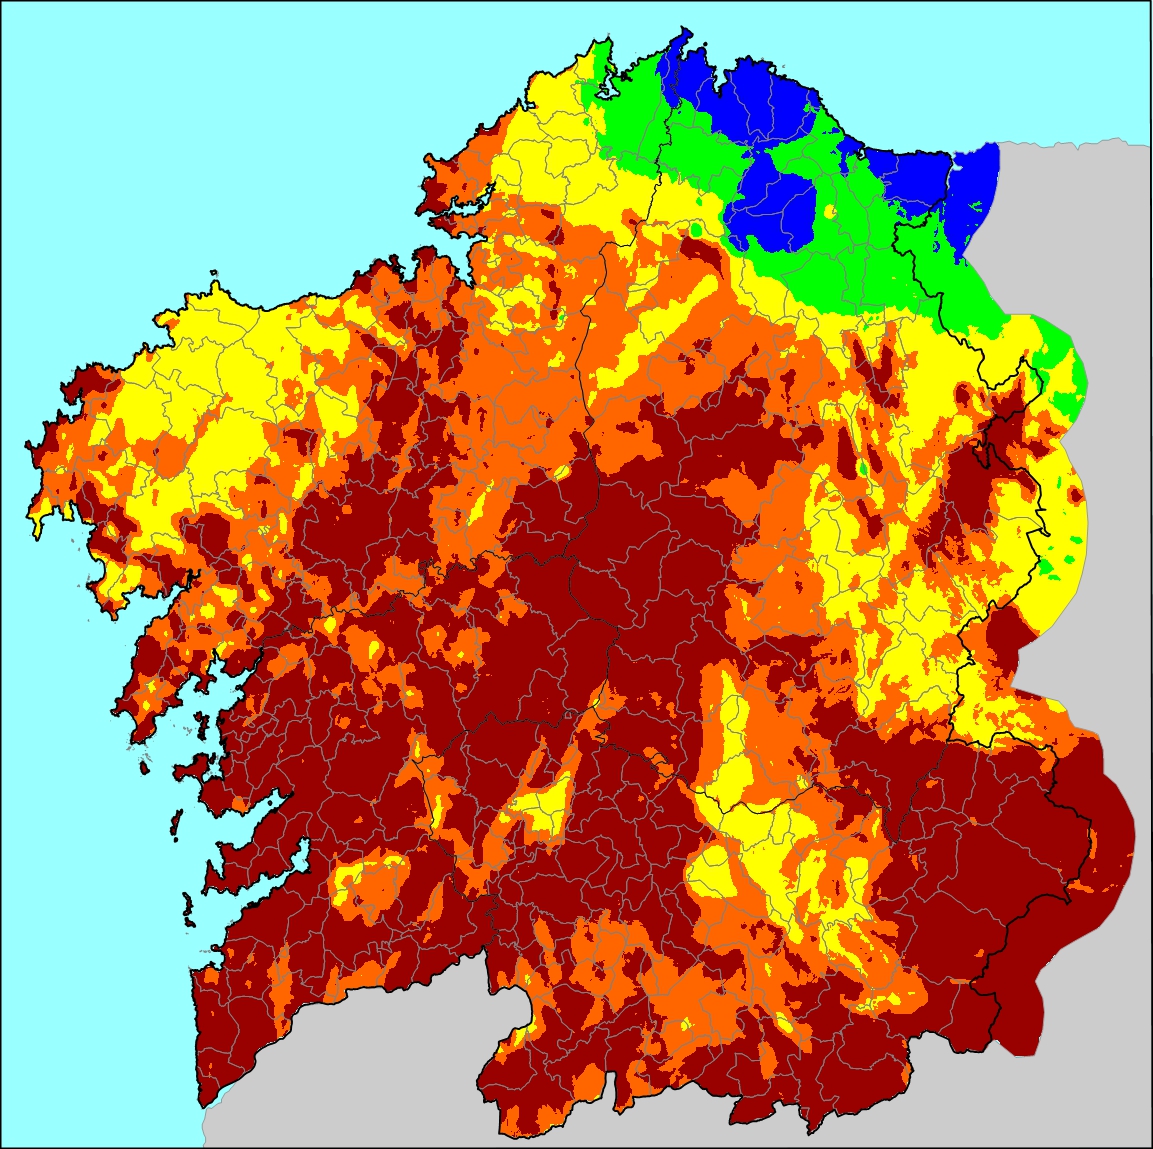 Mapa cos índices de risco diario de incendio forestal